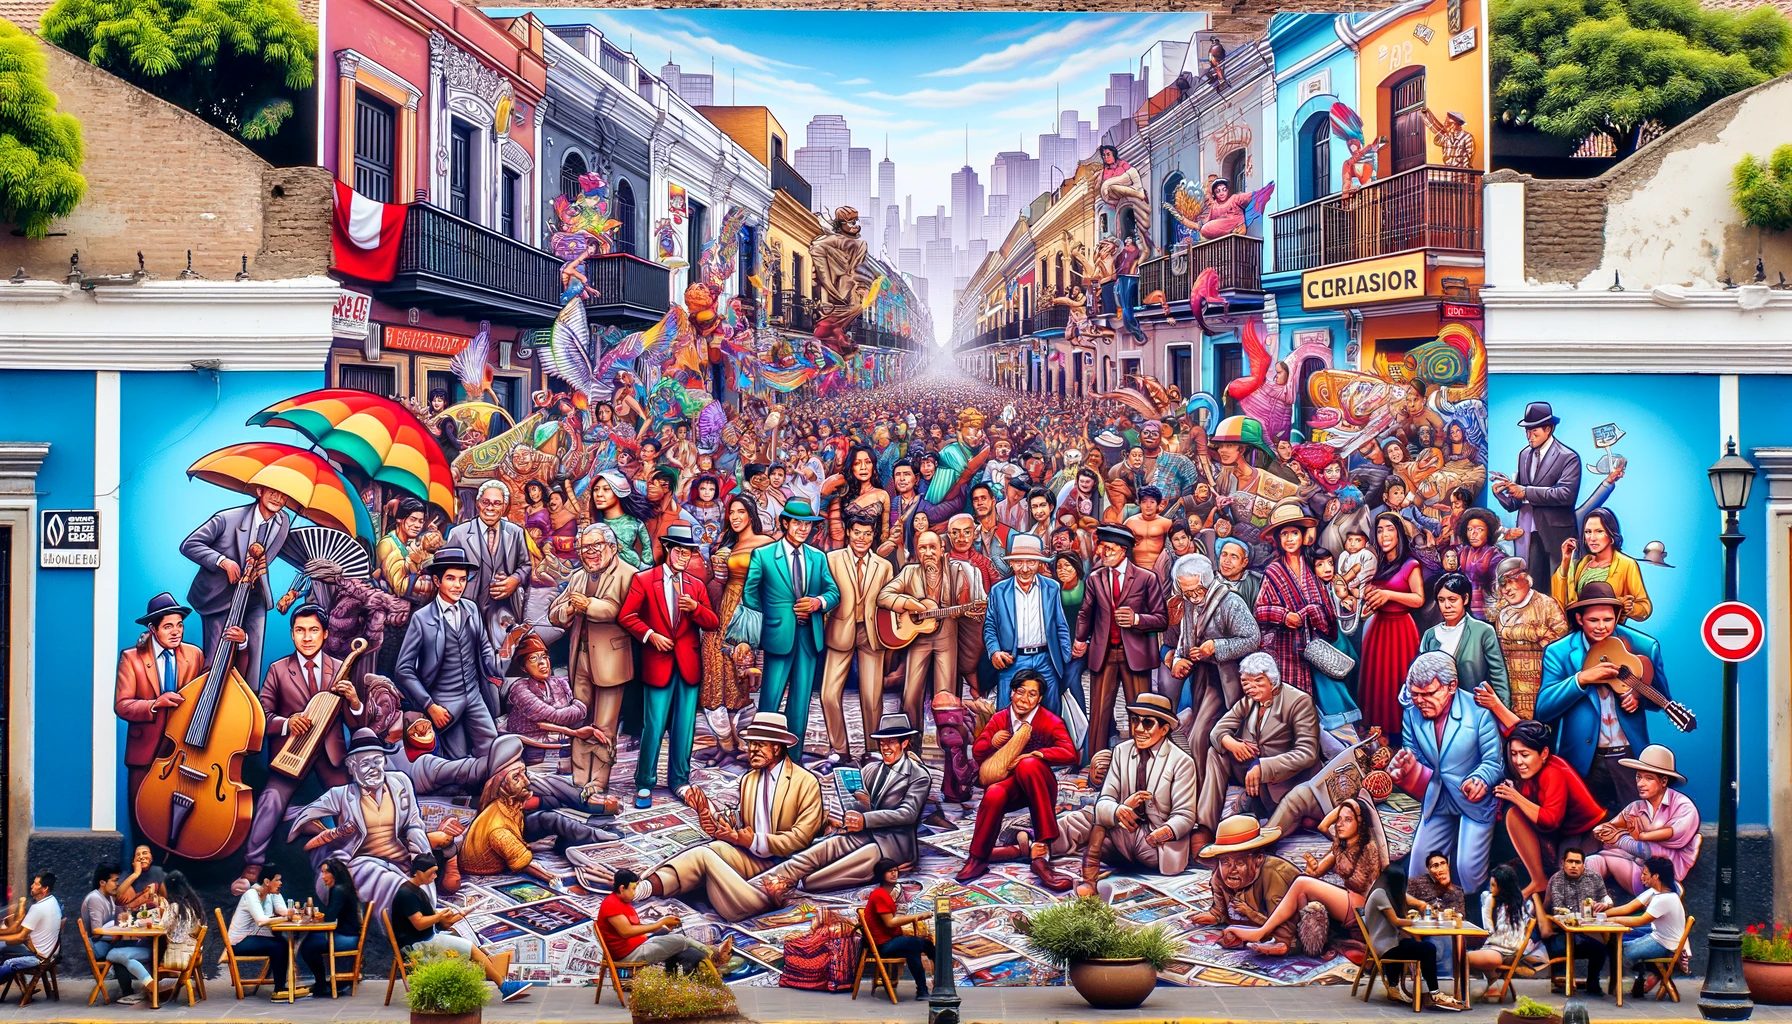 Vibrant street mural celebrating cultural diversity and community.